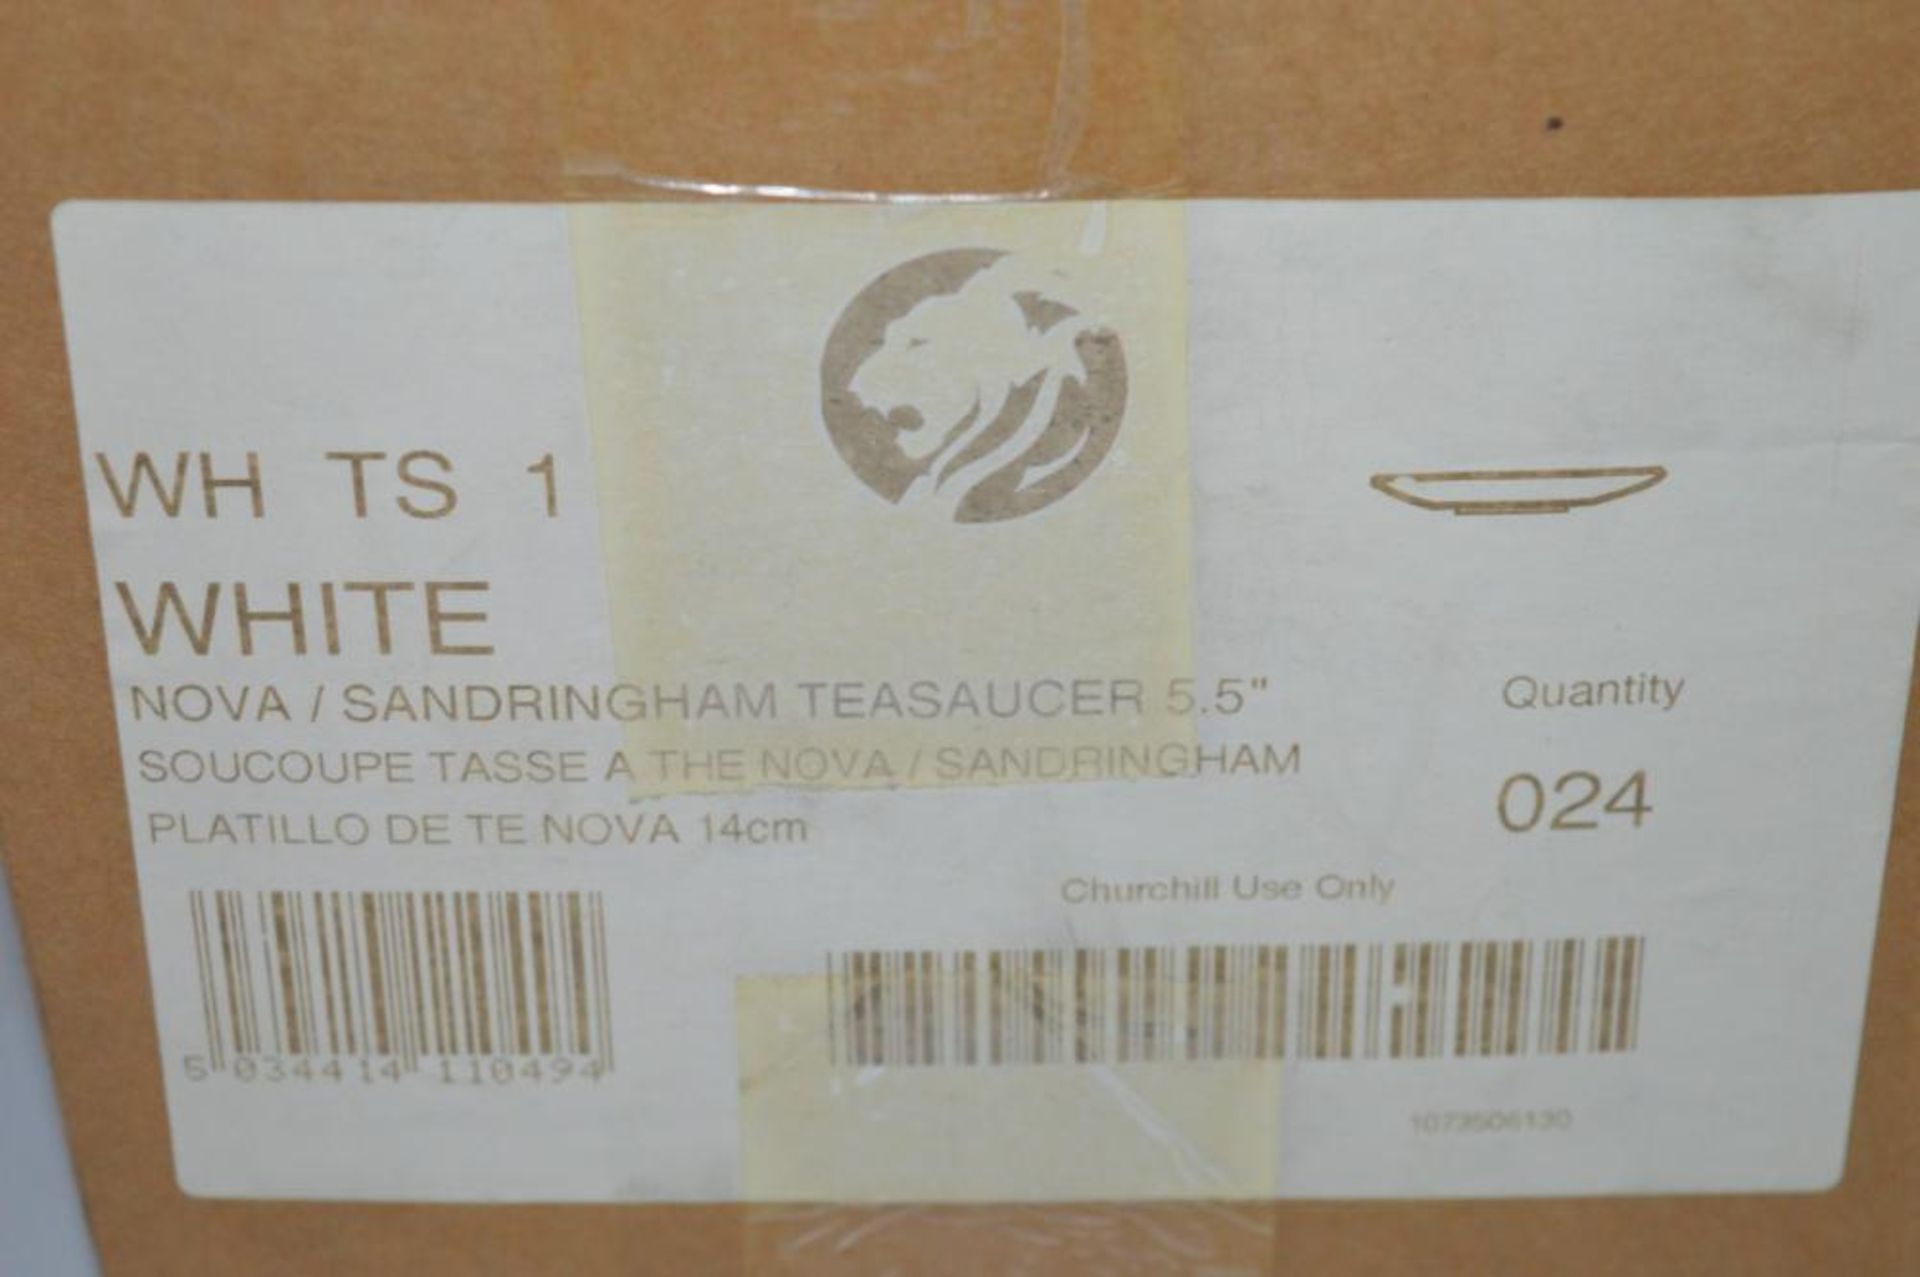 96 x Churchill Plain White Nova Tea Saucers 5.5" - New Boxed Stock - rrp £184 - CL232 - Ref JP361 - Image 4 of 4